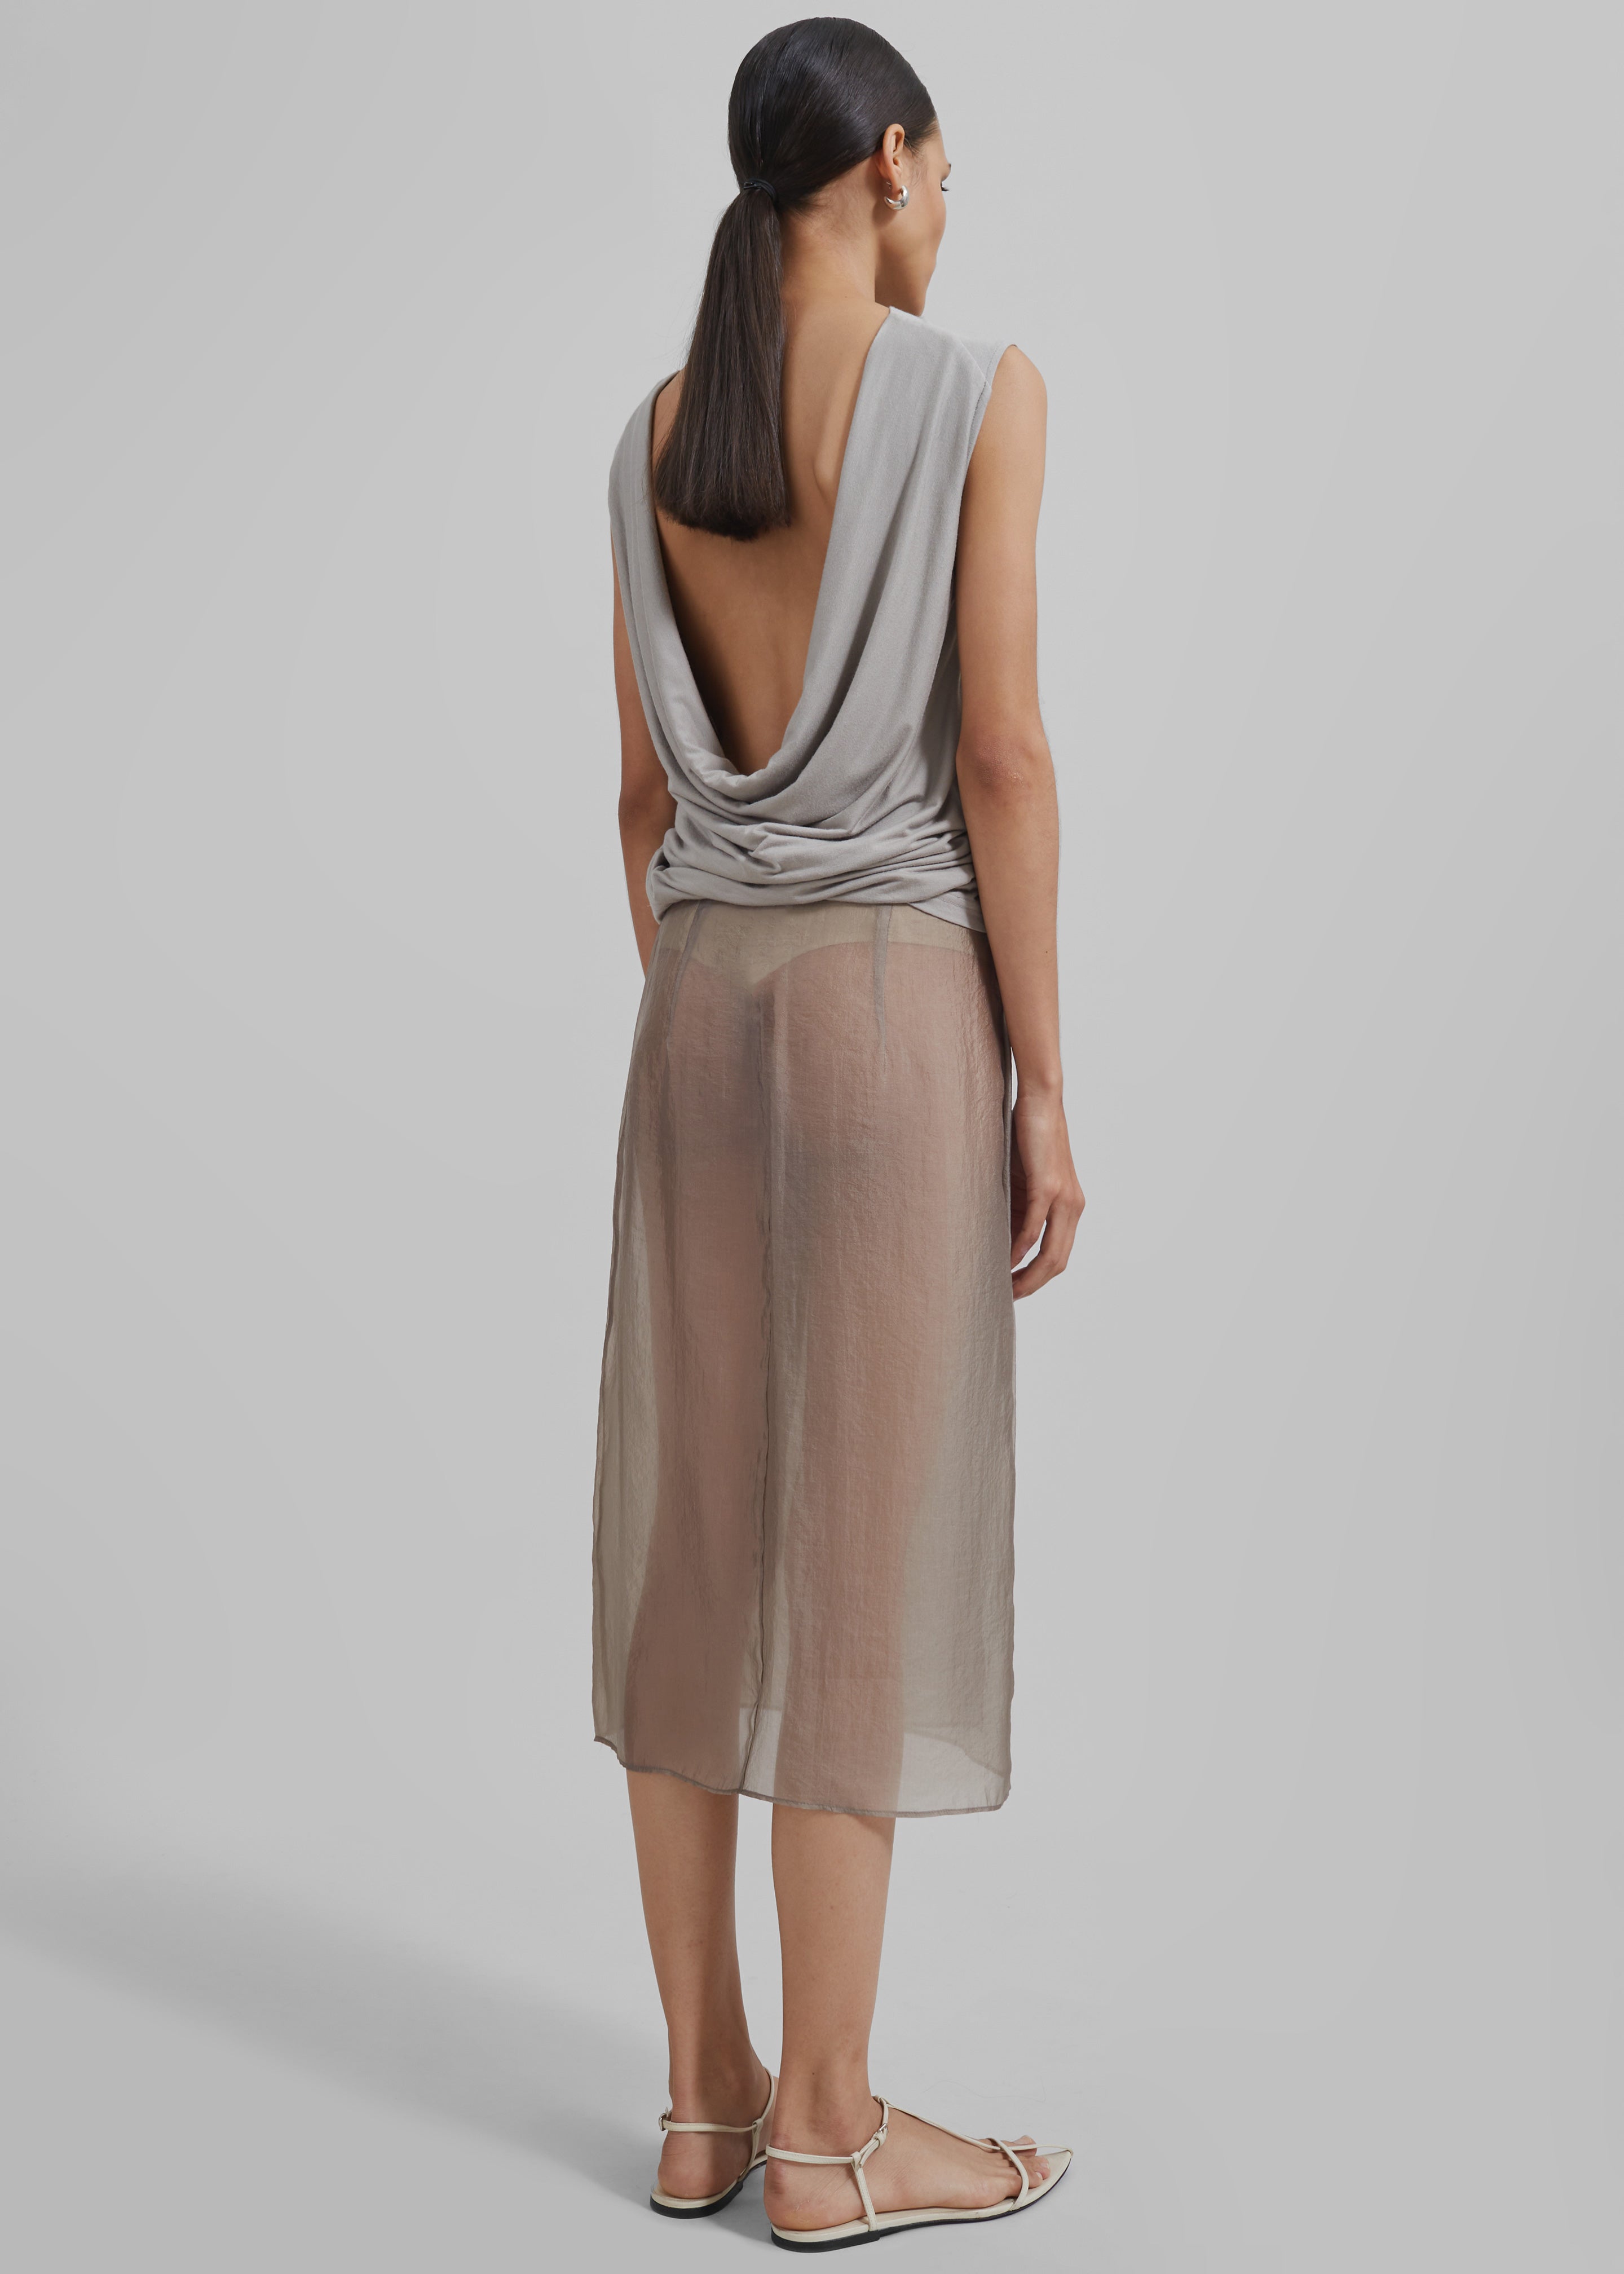 Tia Sheer Layered Skirt - Beige - 9